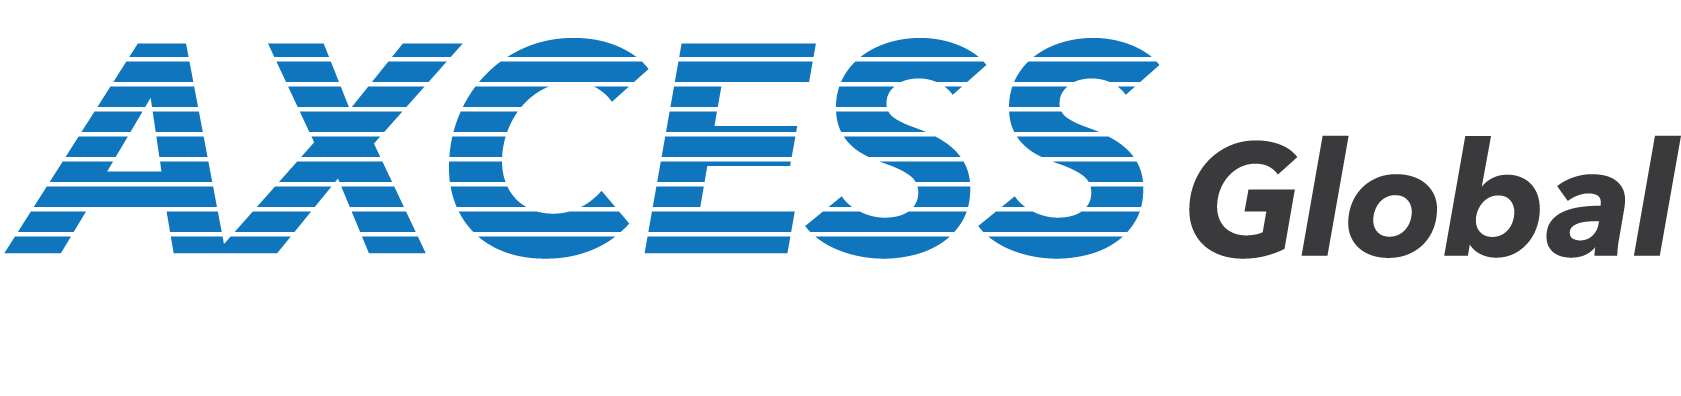 axcess global logo